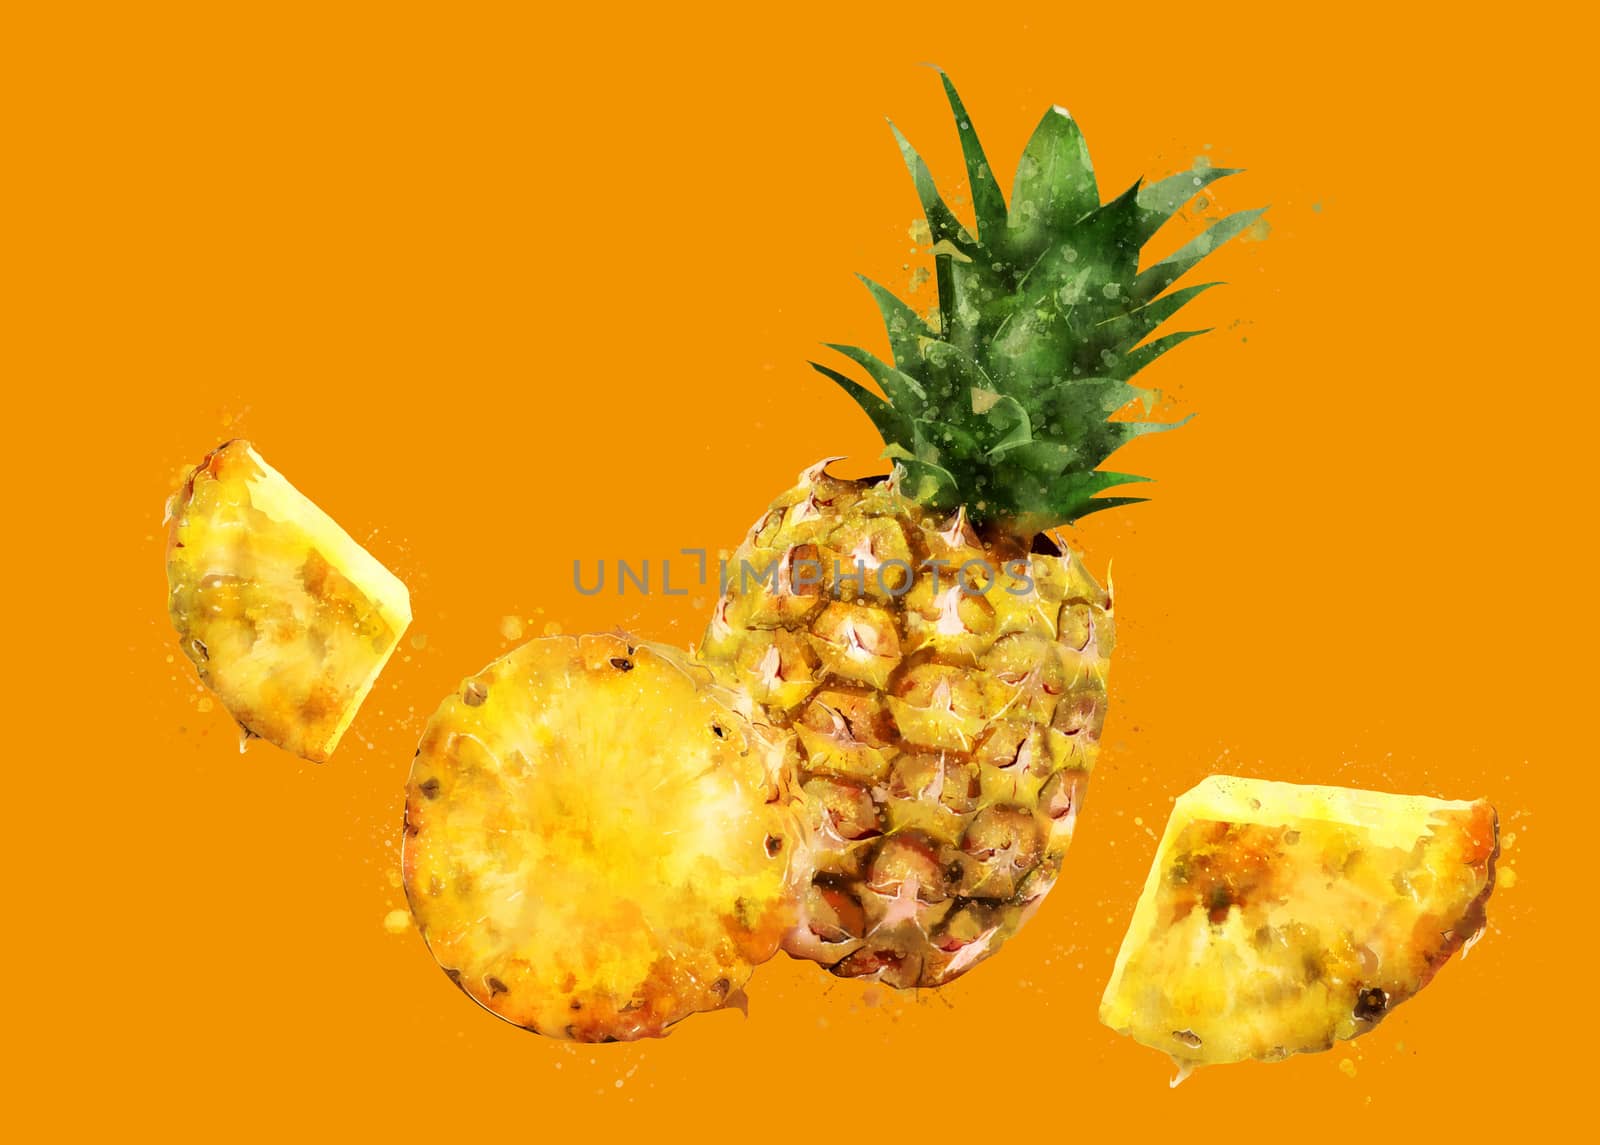 Pineapple, hand-painted illustration on a orange background